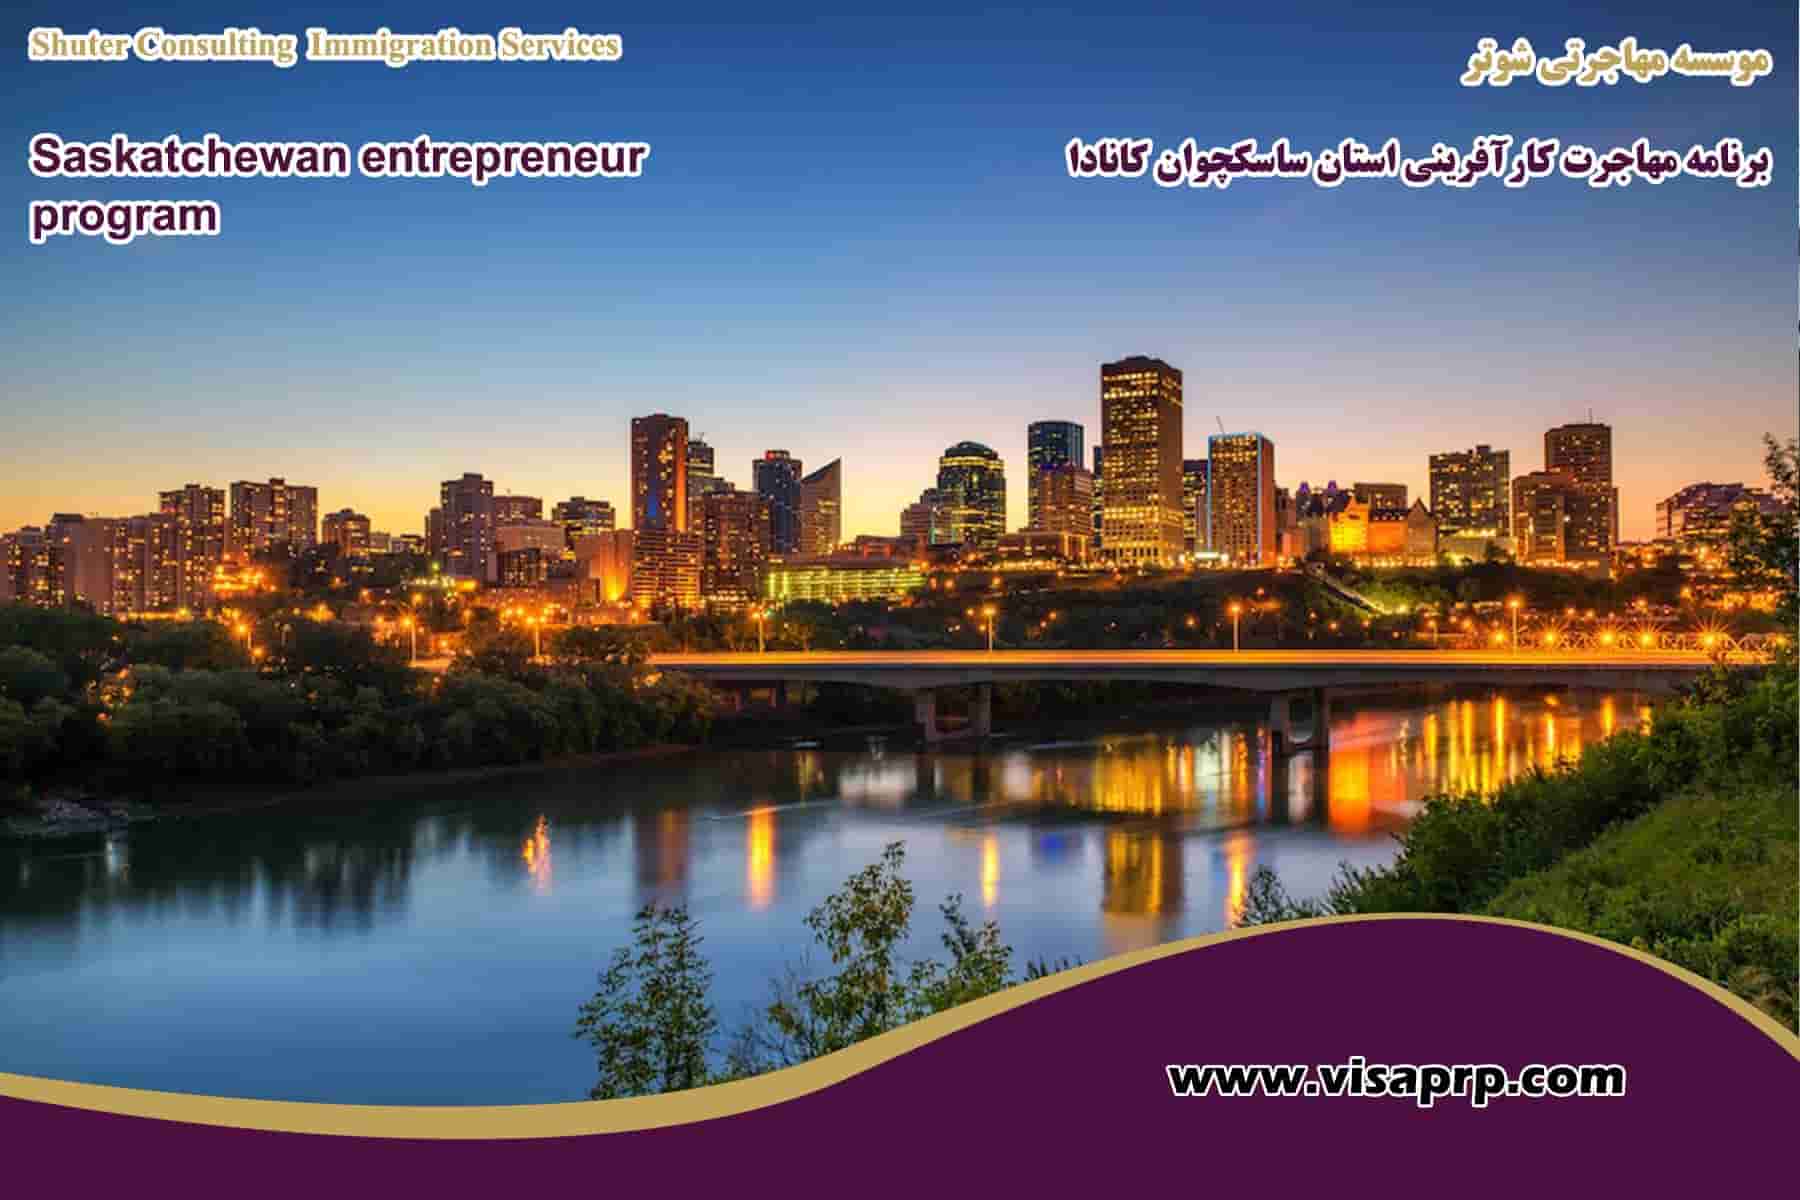 Saskatchewan-entrepreneur-program